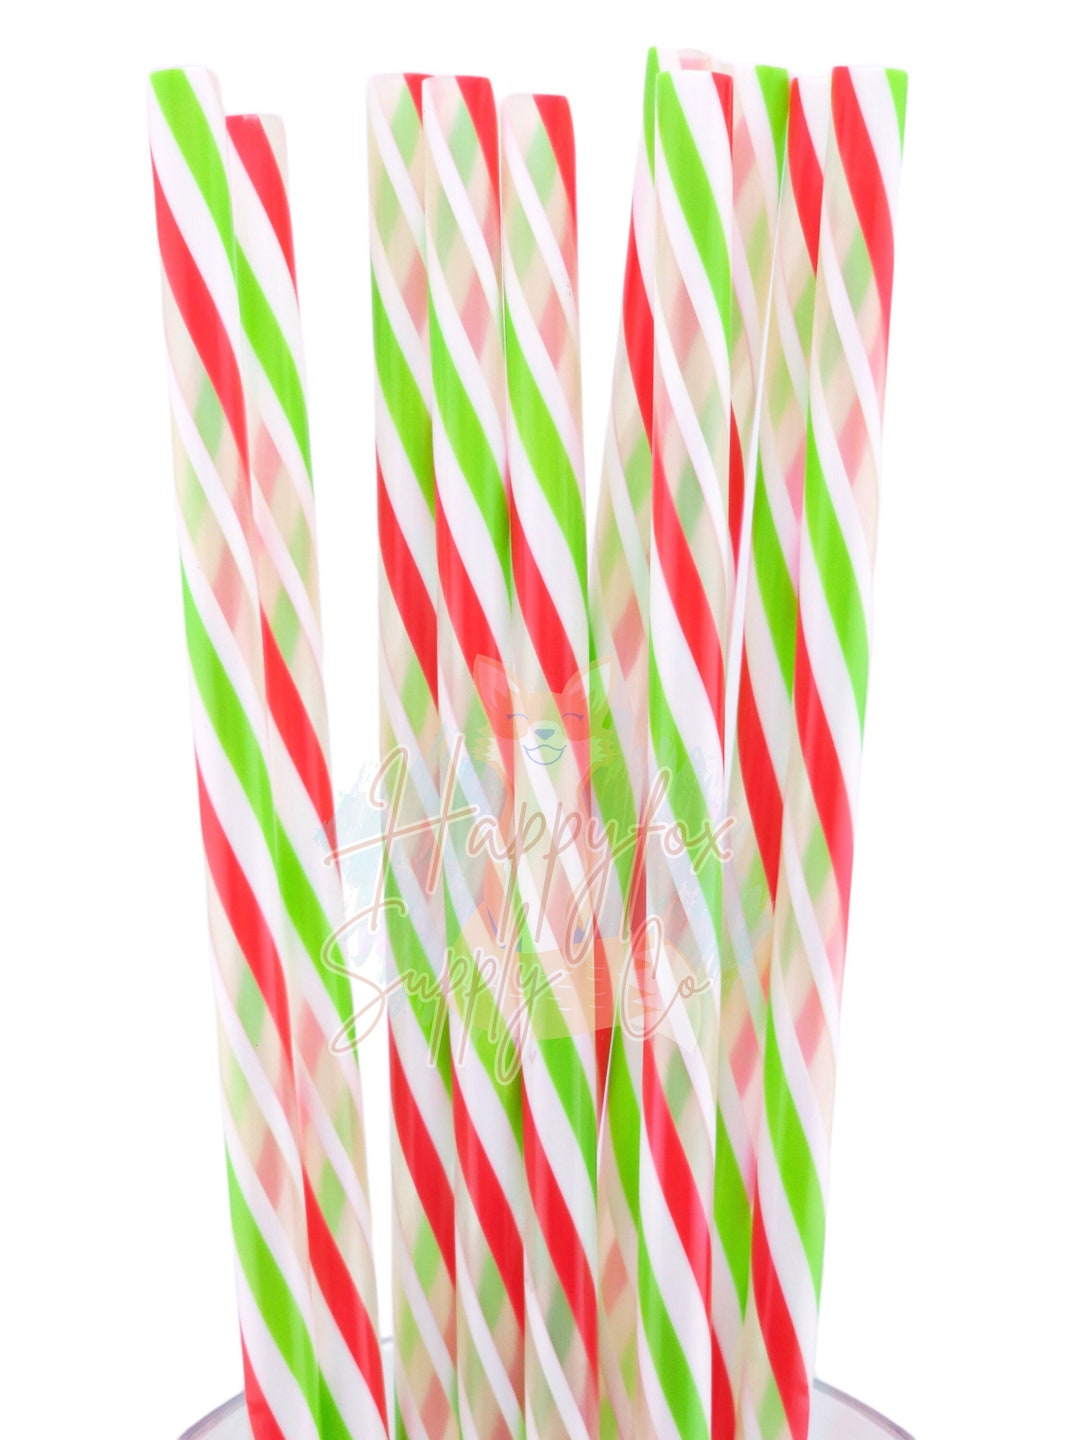 brittyland 40oz Christmas Straws - 4PACK | 12-inch straws, 40oz Replacement  Straws, 40oz Holiday Straws, Extra Long Straws, Candy Cane Straws